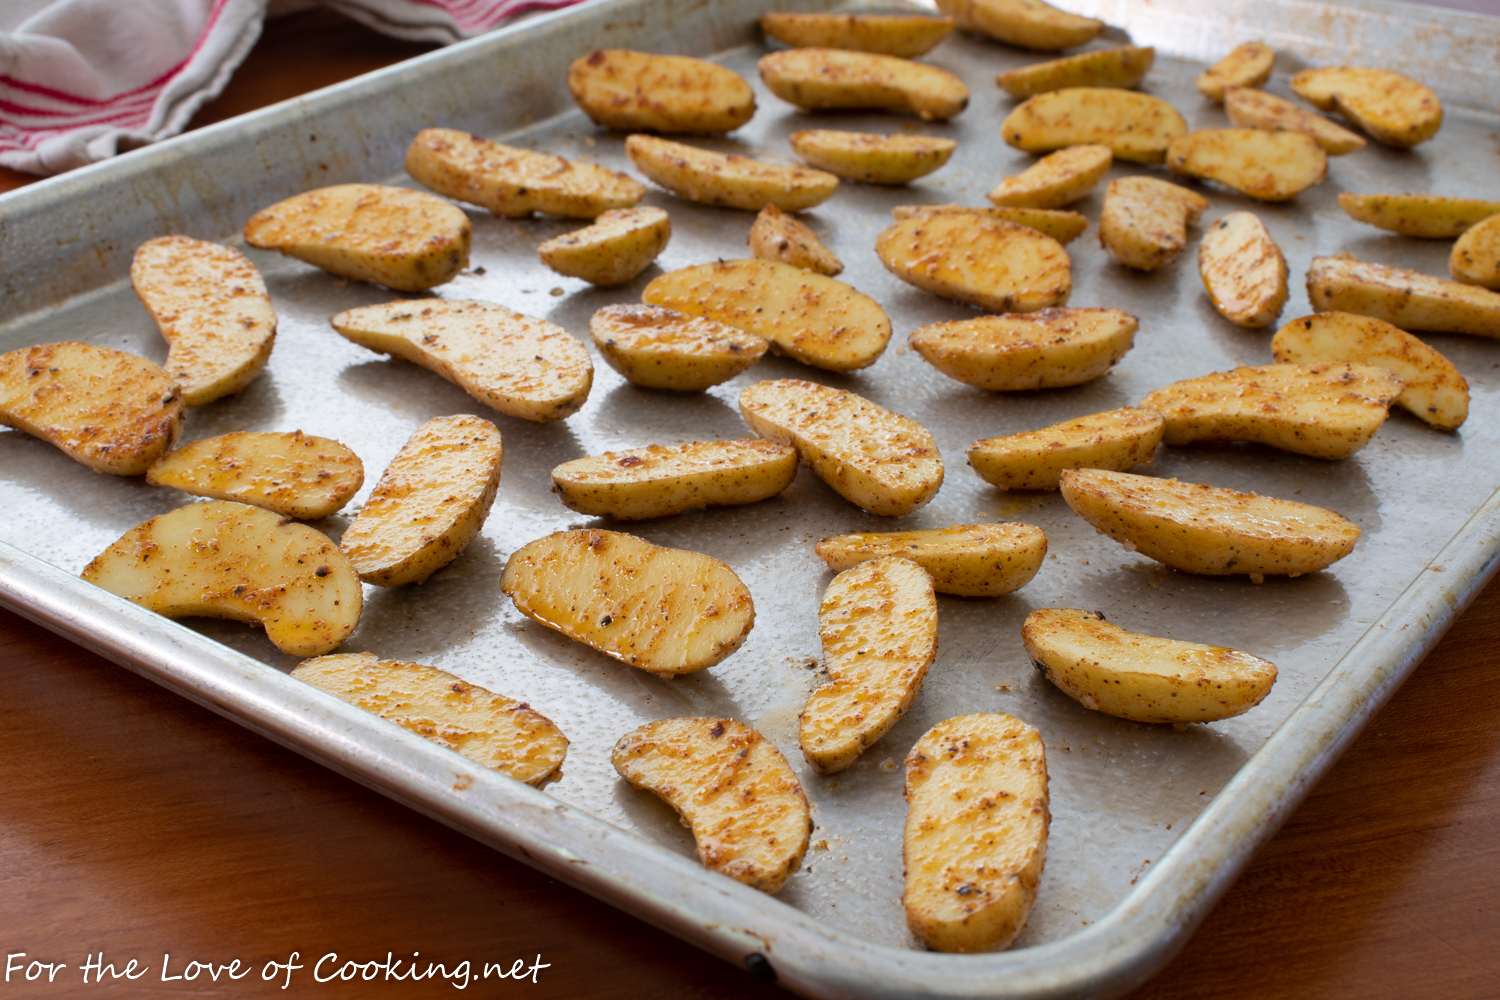 Roasted Spicy Fingerling Potatoes with Lemon-Garlic Aioli